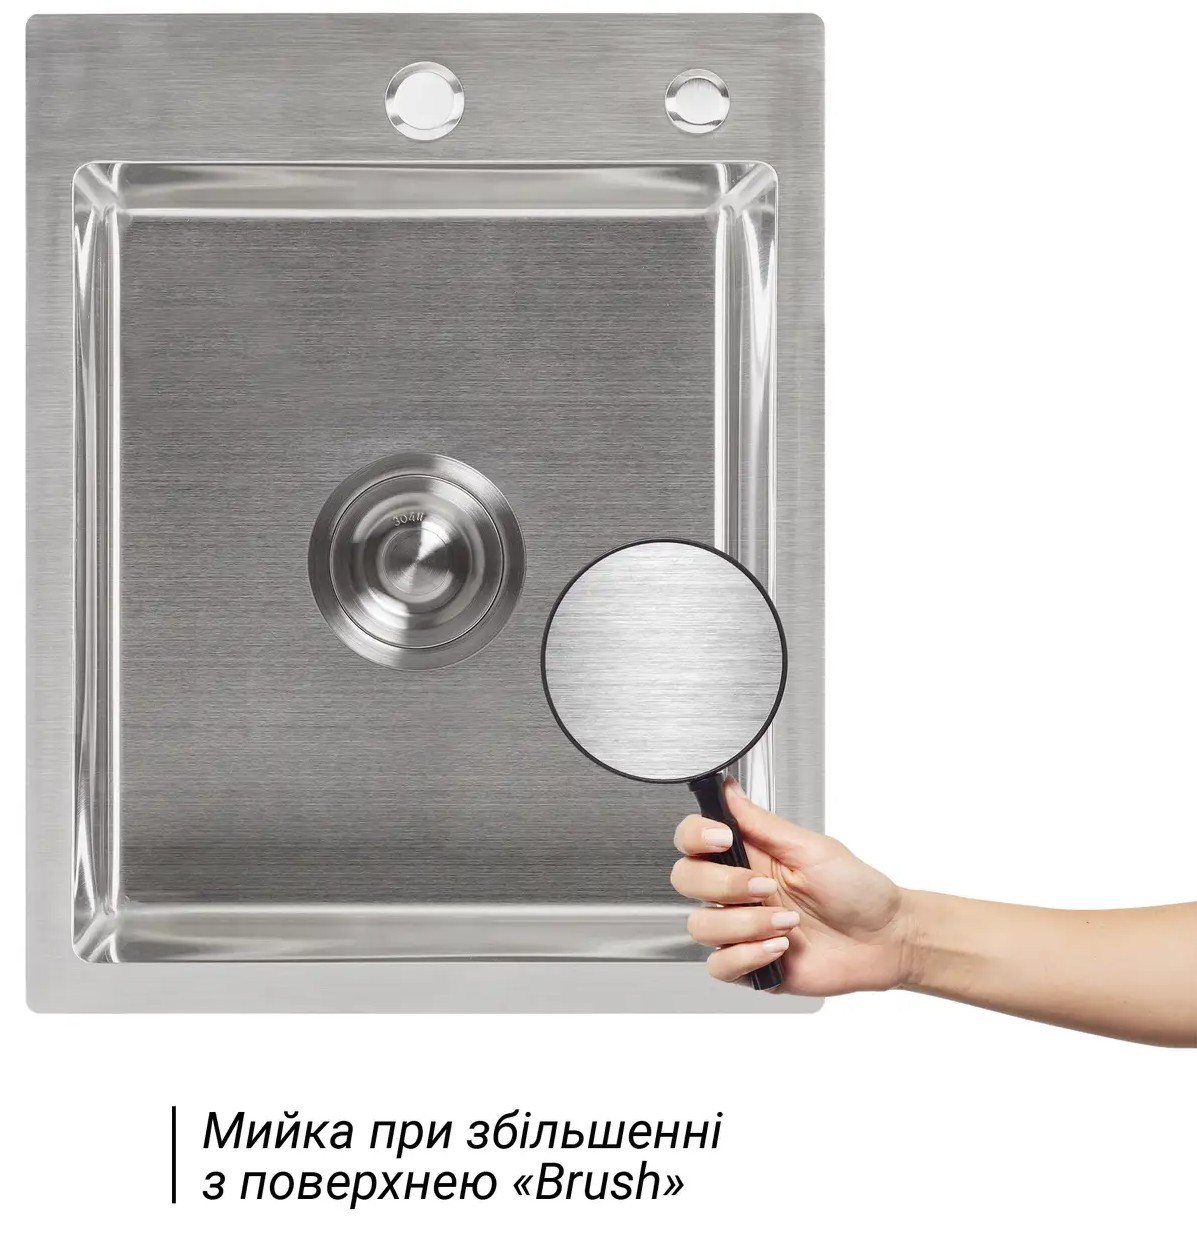 Кухонная мойка Lidz Handmade H4050 Brushed Steel 3,0/0,8 мм (LDH4050BRU39258) цена 3108 грн - фотография 2